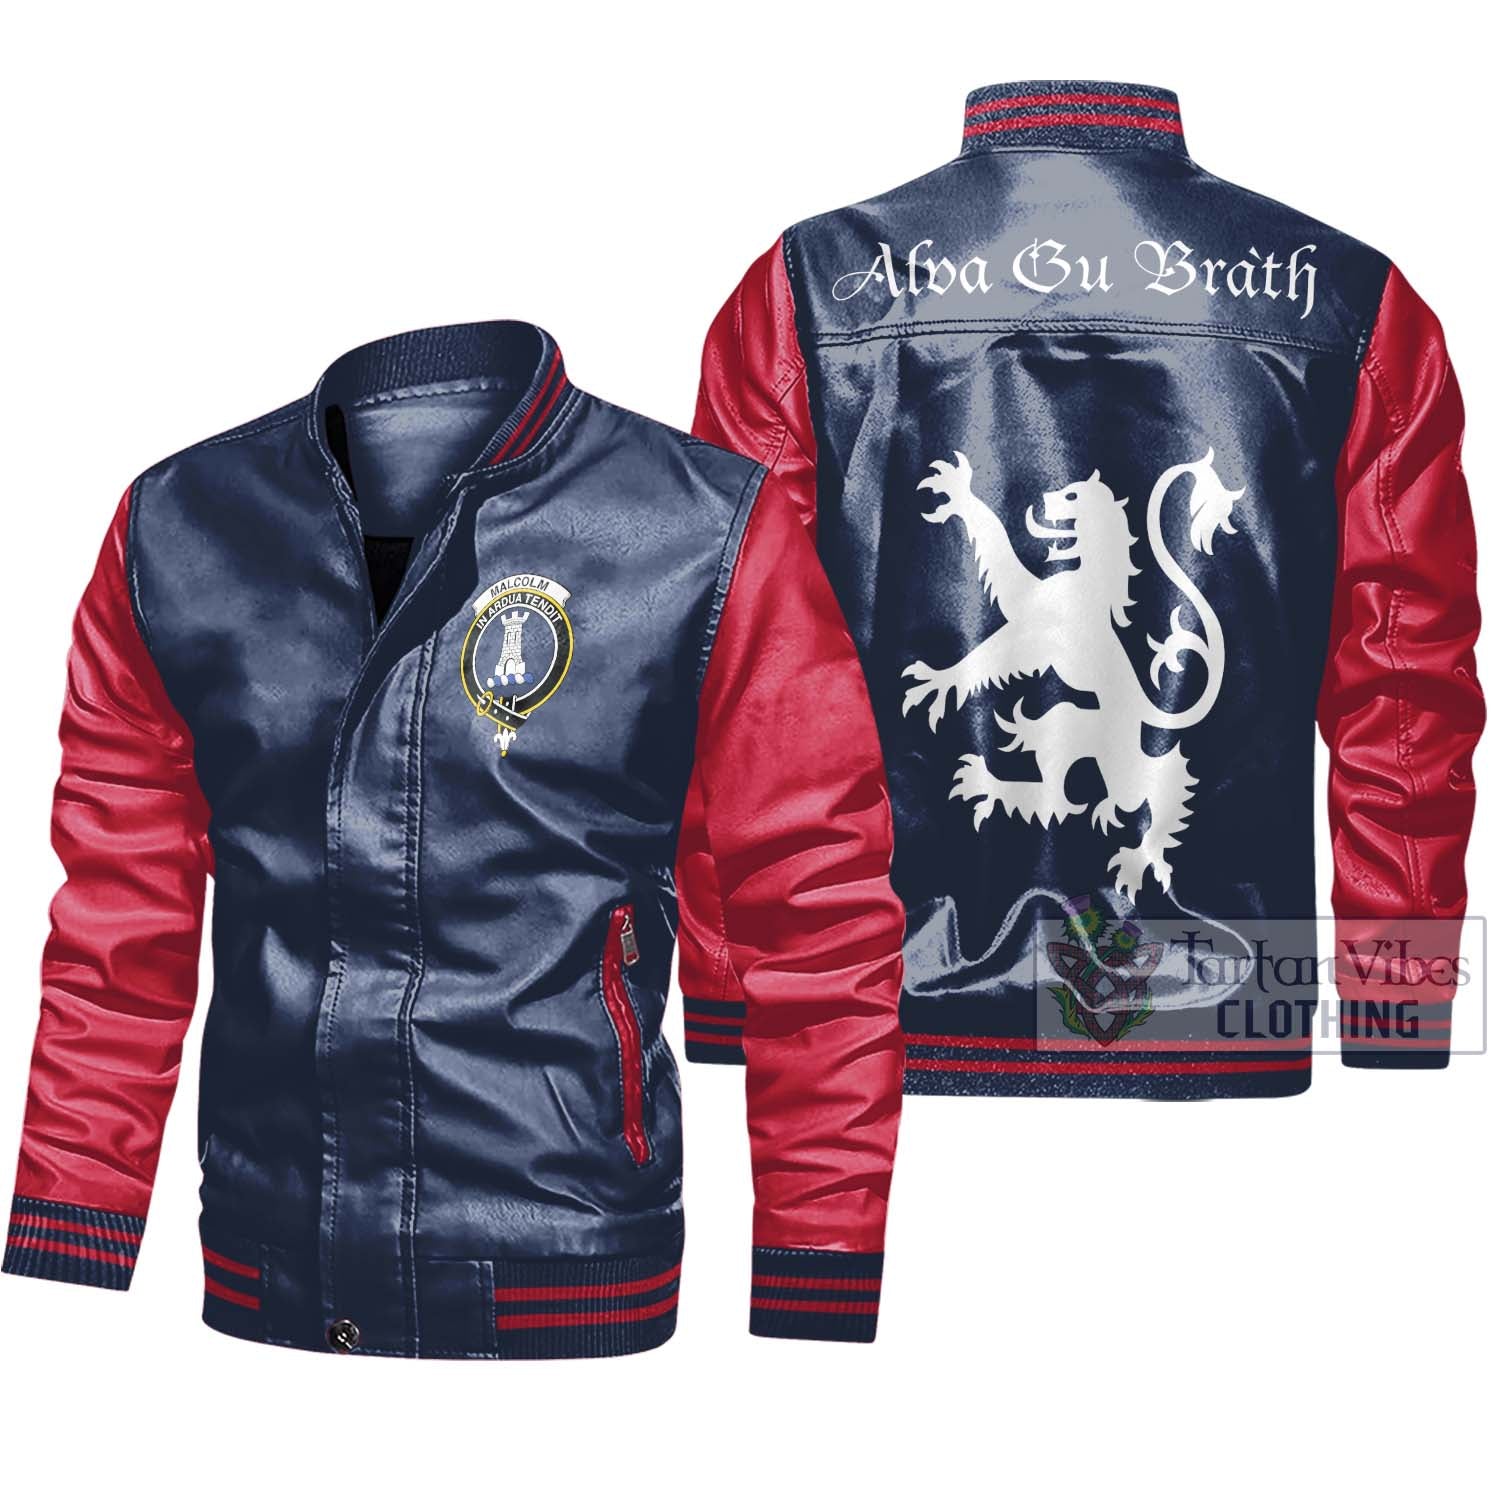 Tartan Vibes Clothing Malcolm Family Crest Leather Bomber Jacket Lion Rampant Alba Gu Brath Style